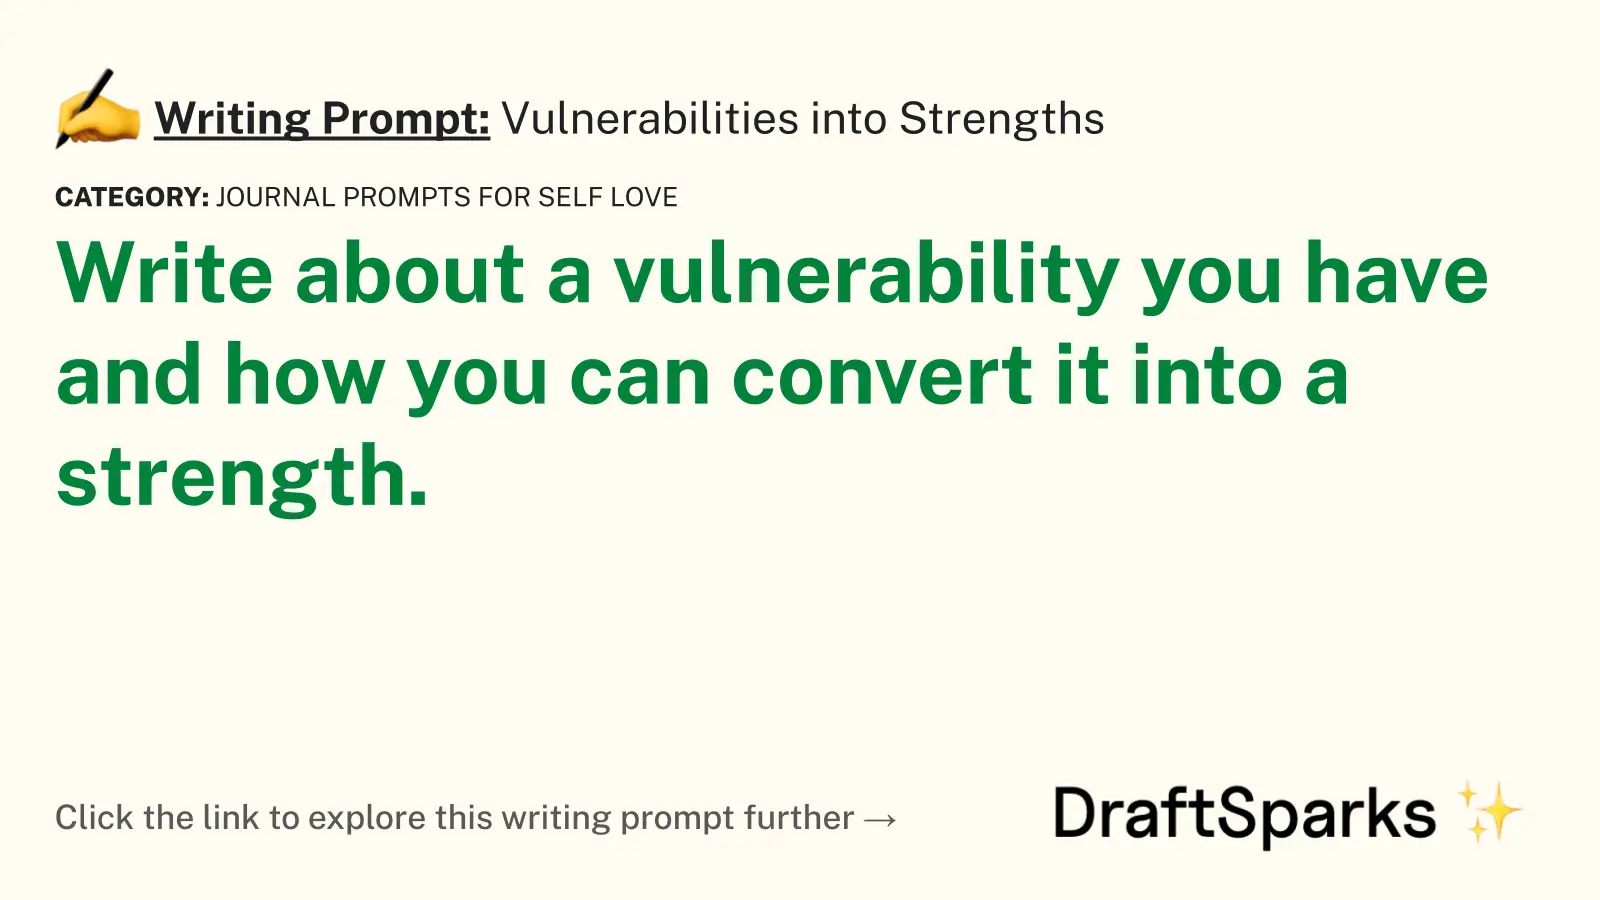 Vulnerabilities into Strengths